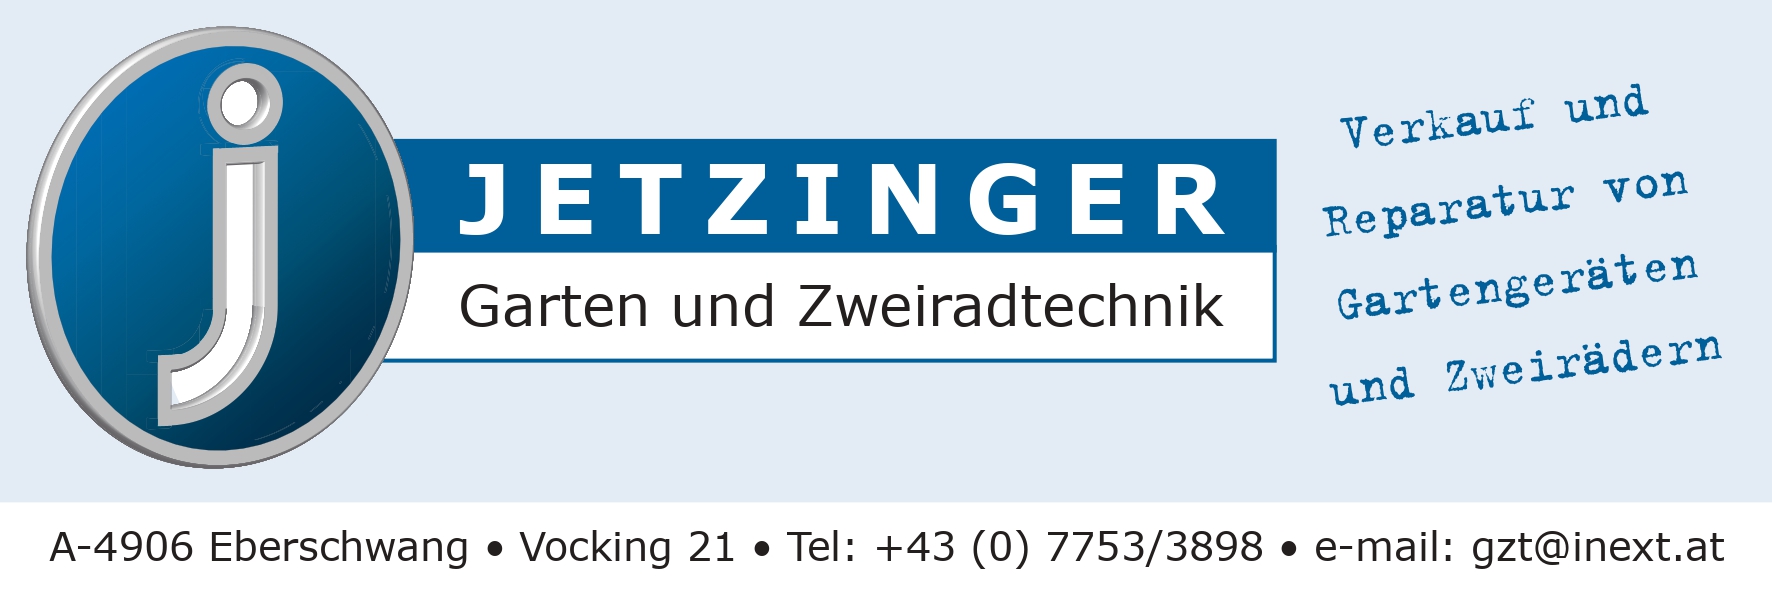 Jetzinger_Zweirad_page-0001